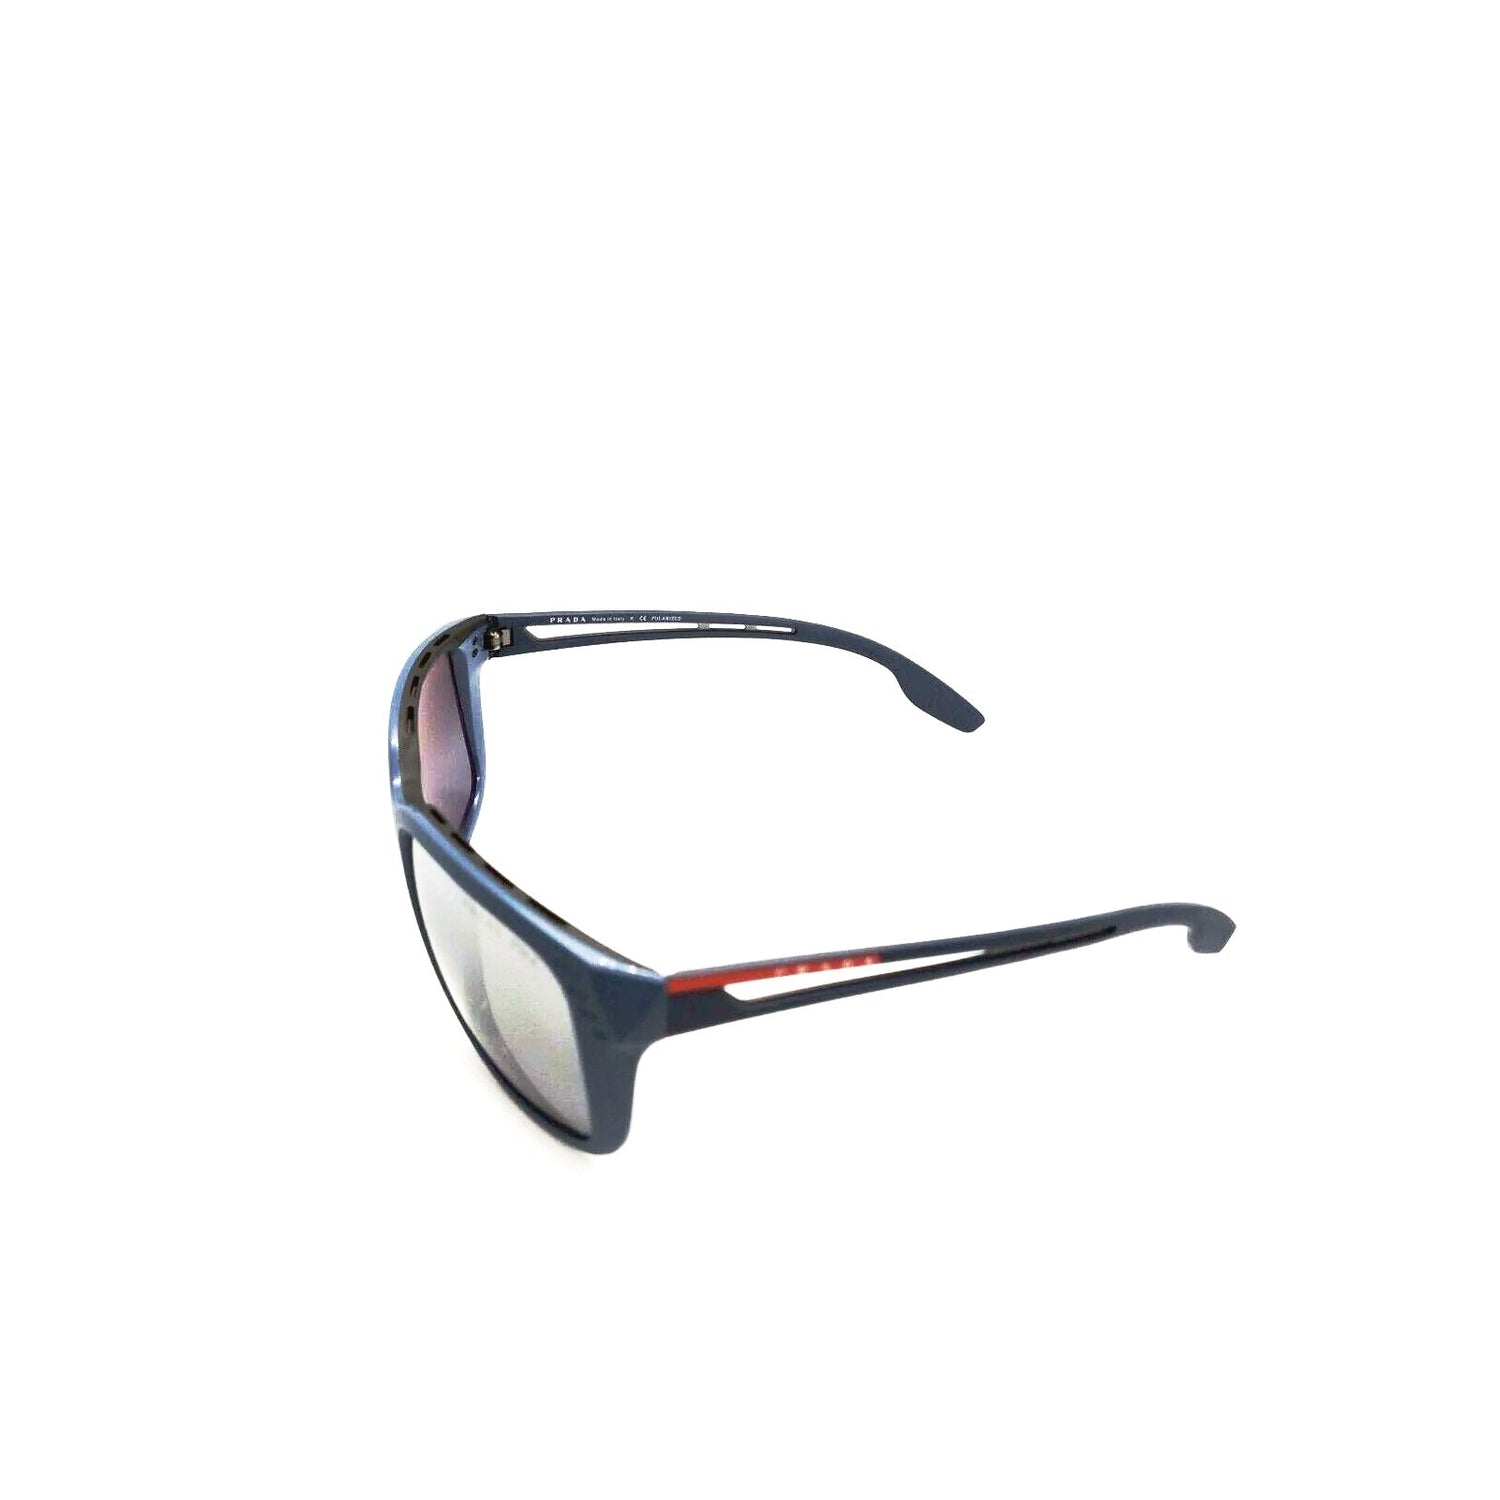 Prada mens polarized sunglasses sps 03TS  blue frame gray lenses